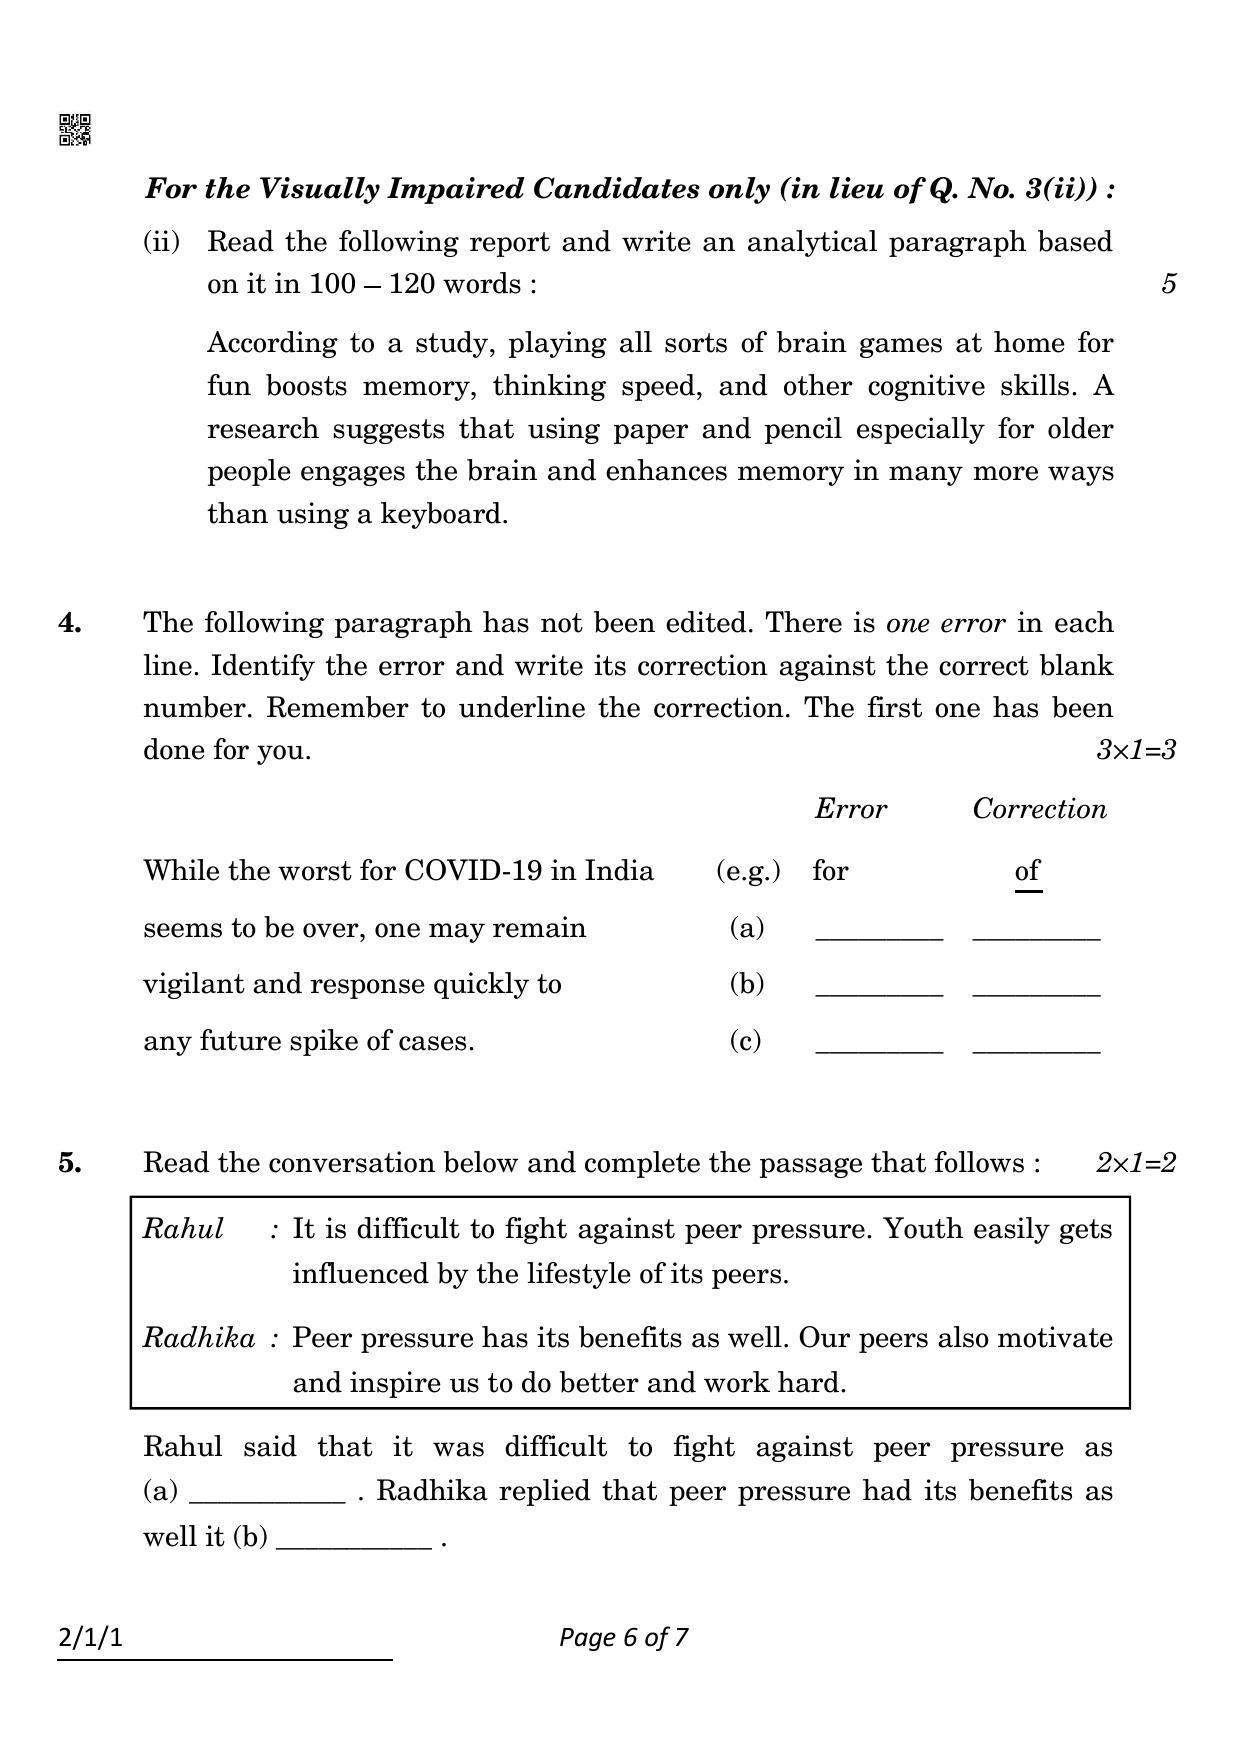 CBSE Class 10 2-1-1 English L & L 2022 Question Paper - Page 6